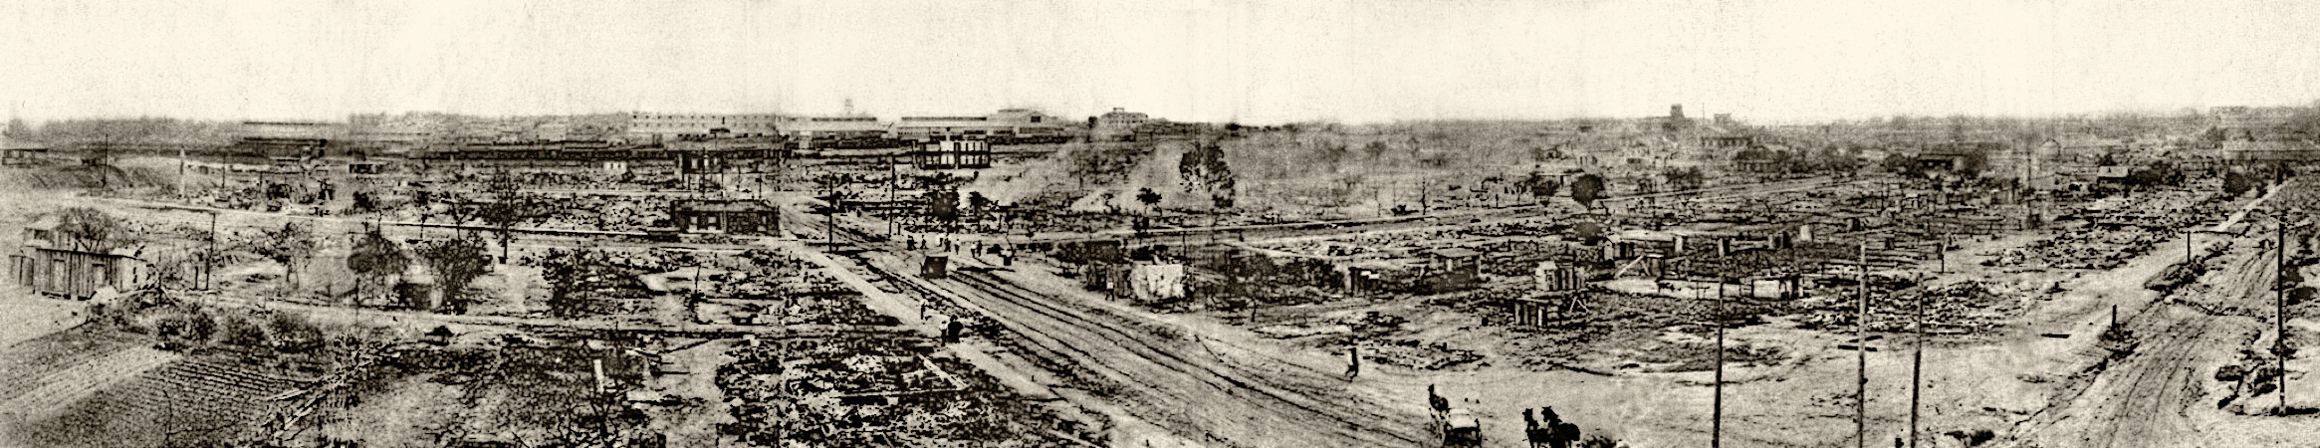 panorama of Greenwood destruction